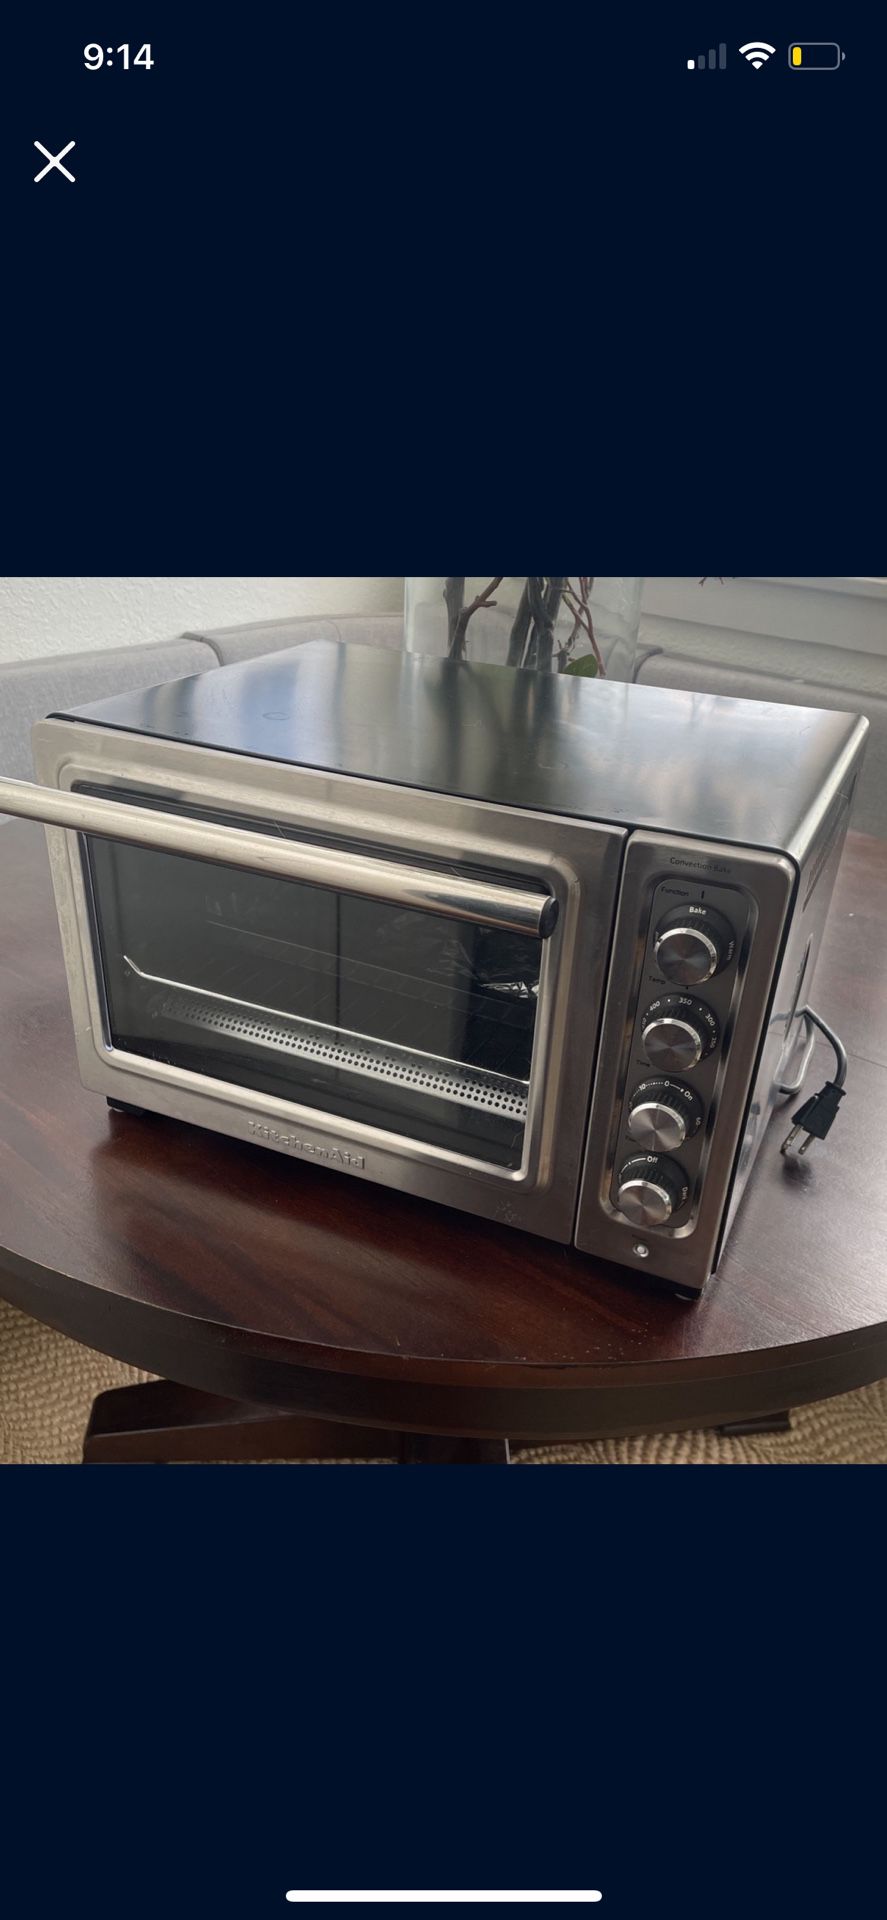 Kitchenaid Toaster, Broiler Oven Countertop